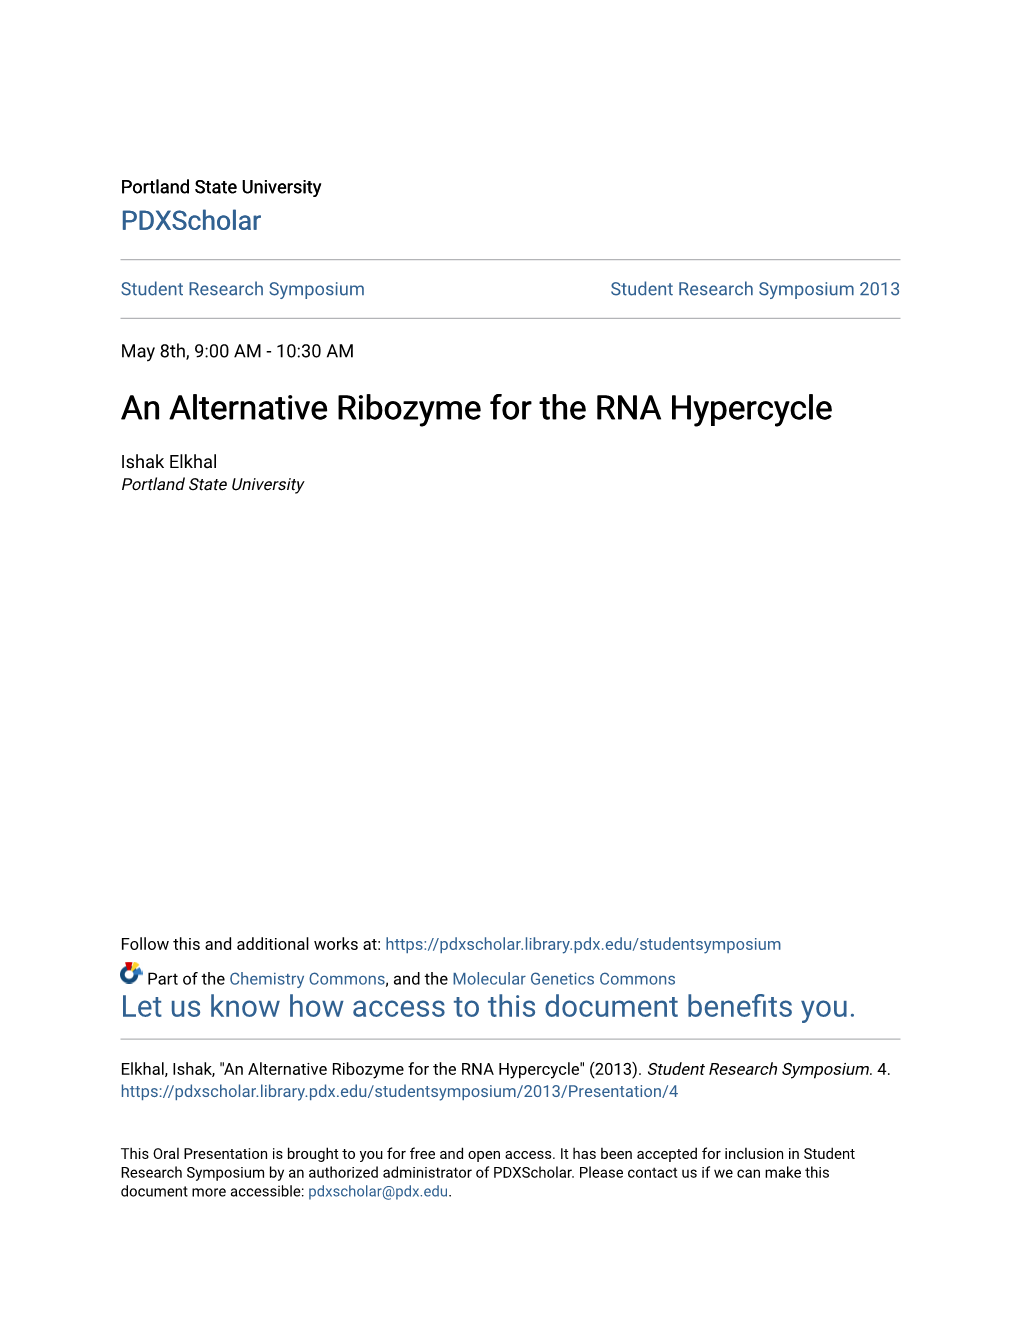 An Alternative Ribozyme for the RNA Hypercycle